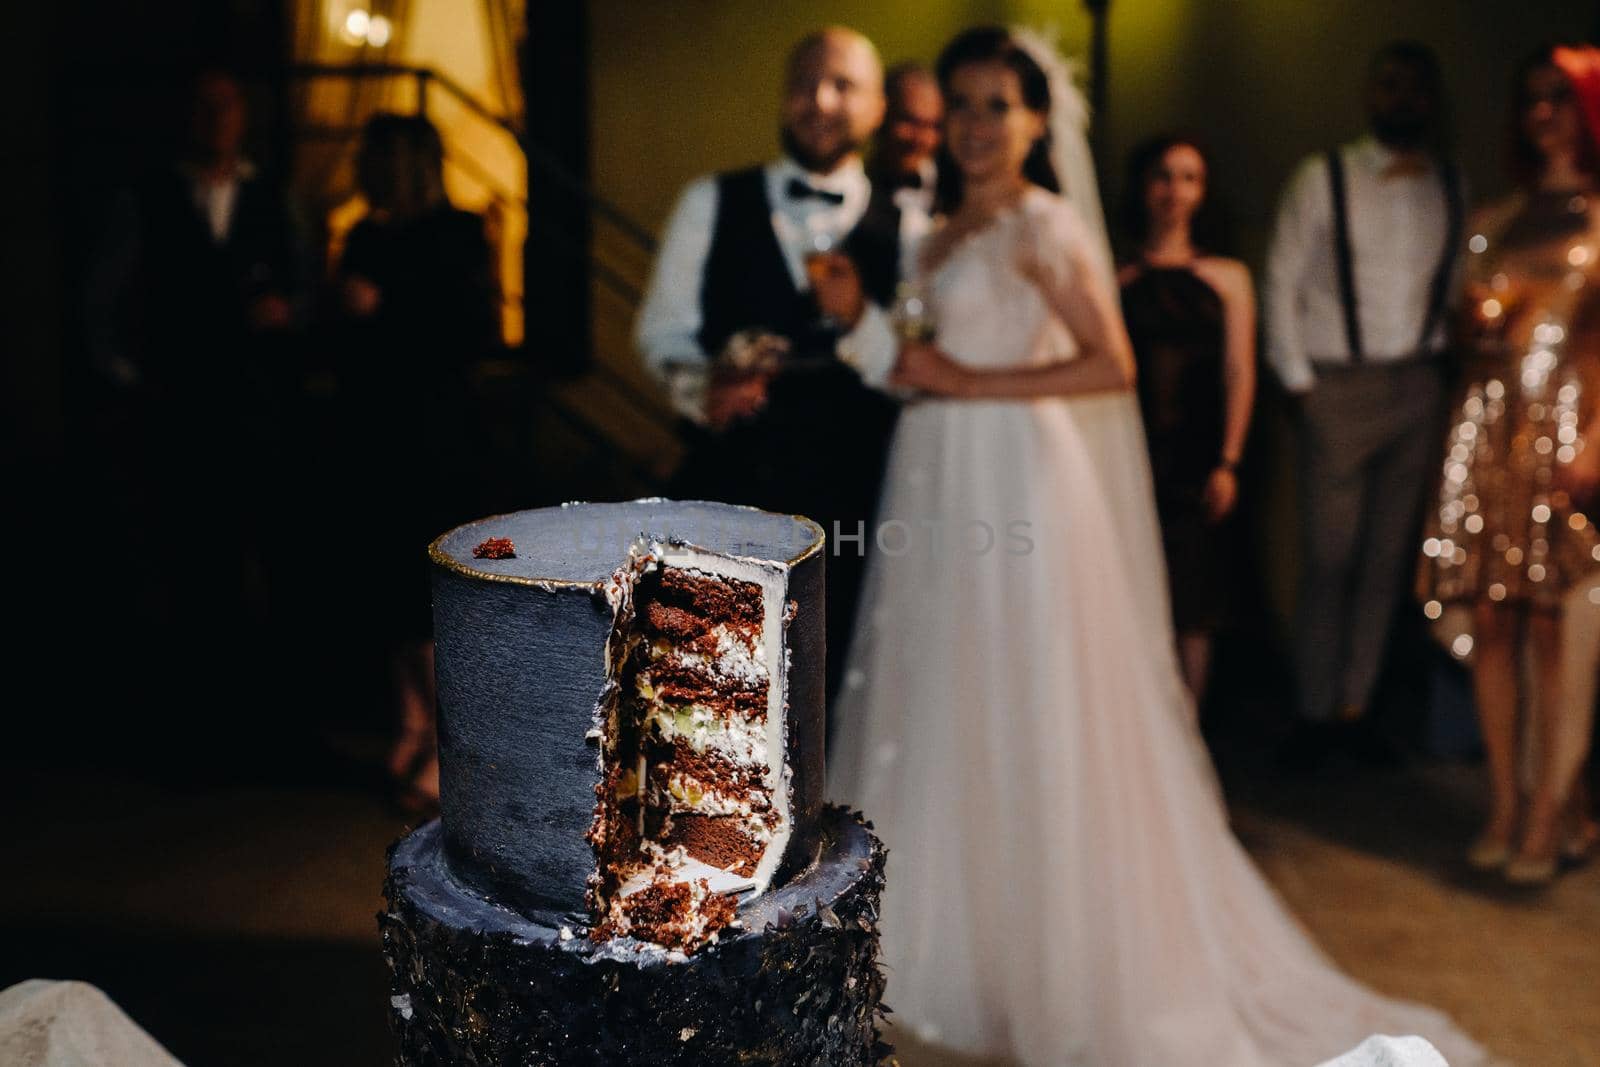 A close-up cut of a wedding cake at a wedding by Lobachad